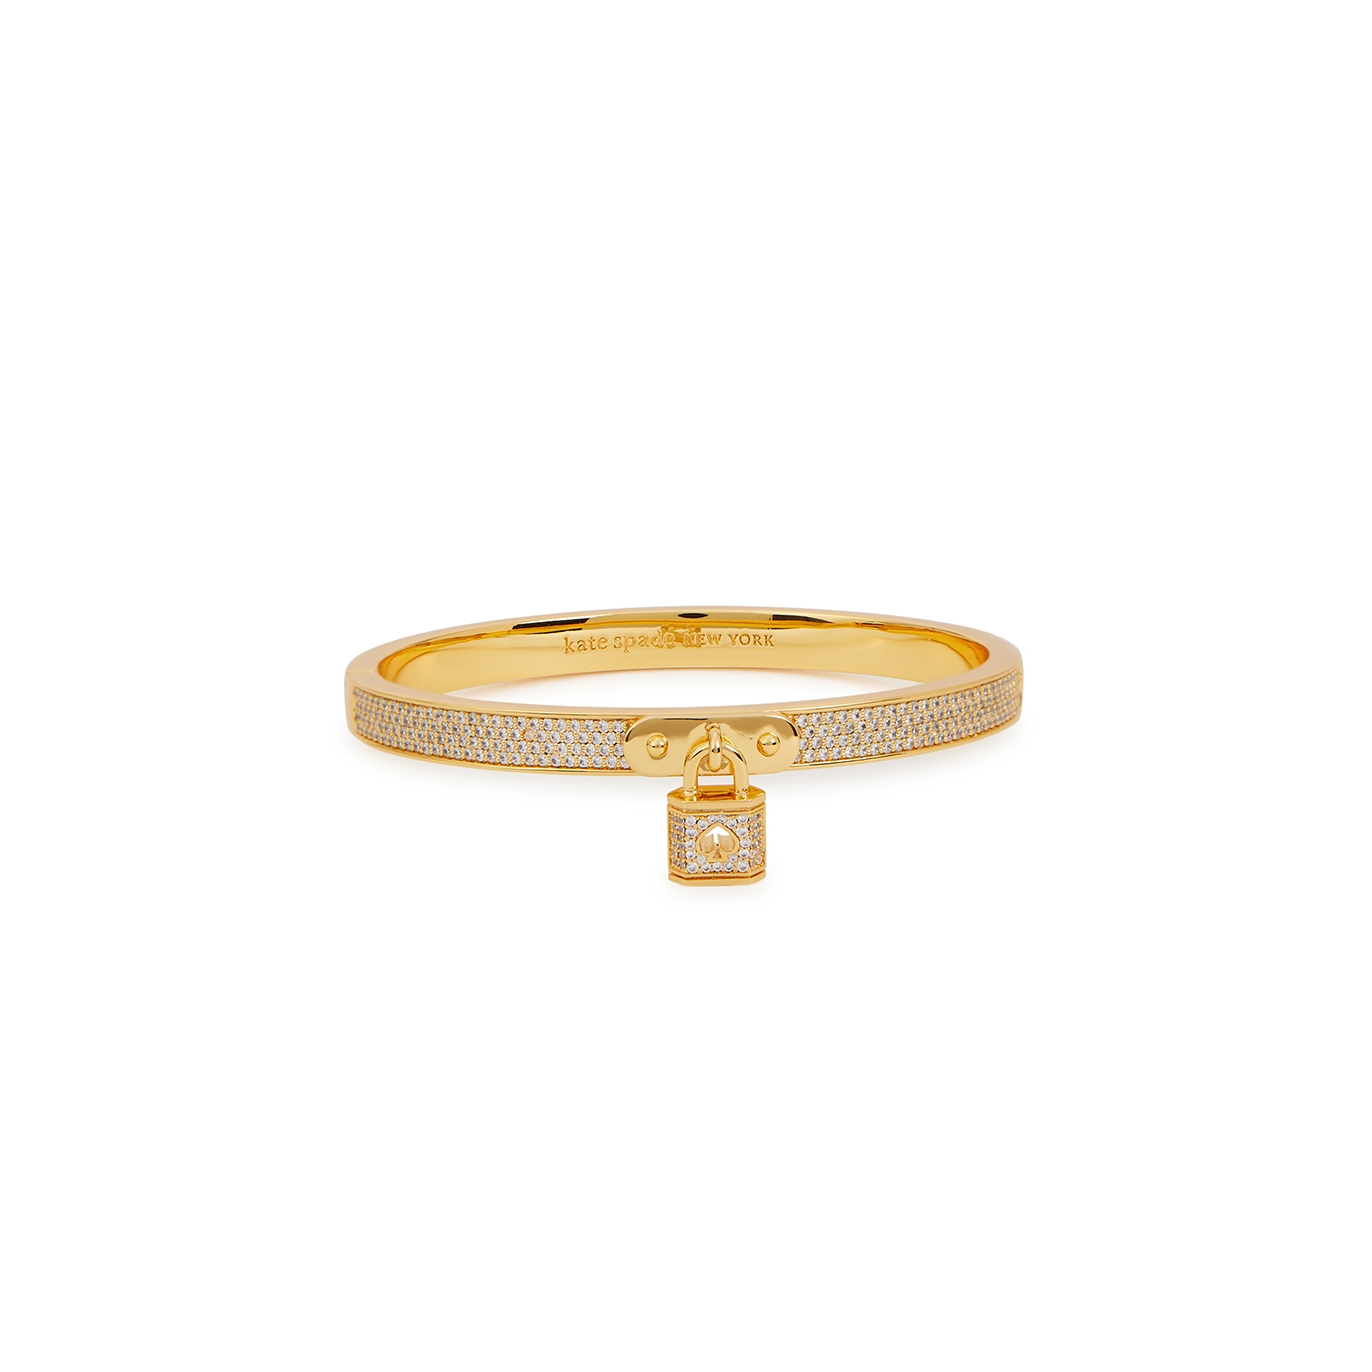 Kate Spade New York Lock And Spade Embellished Bracelet - Gold - One Size